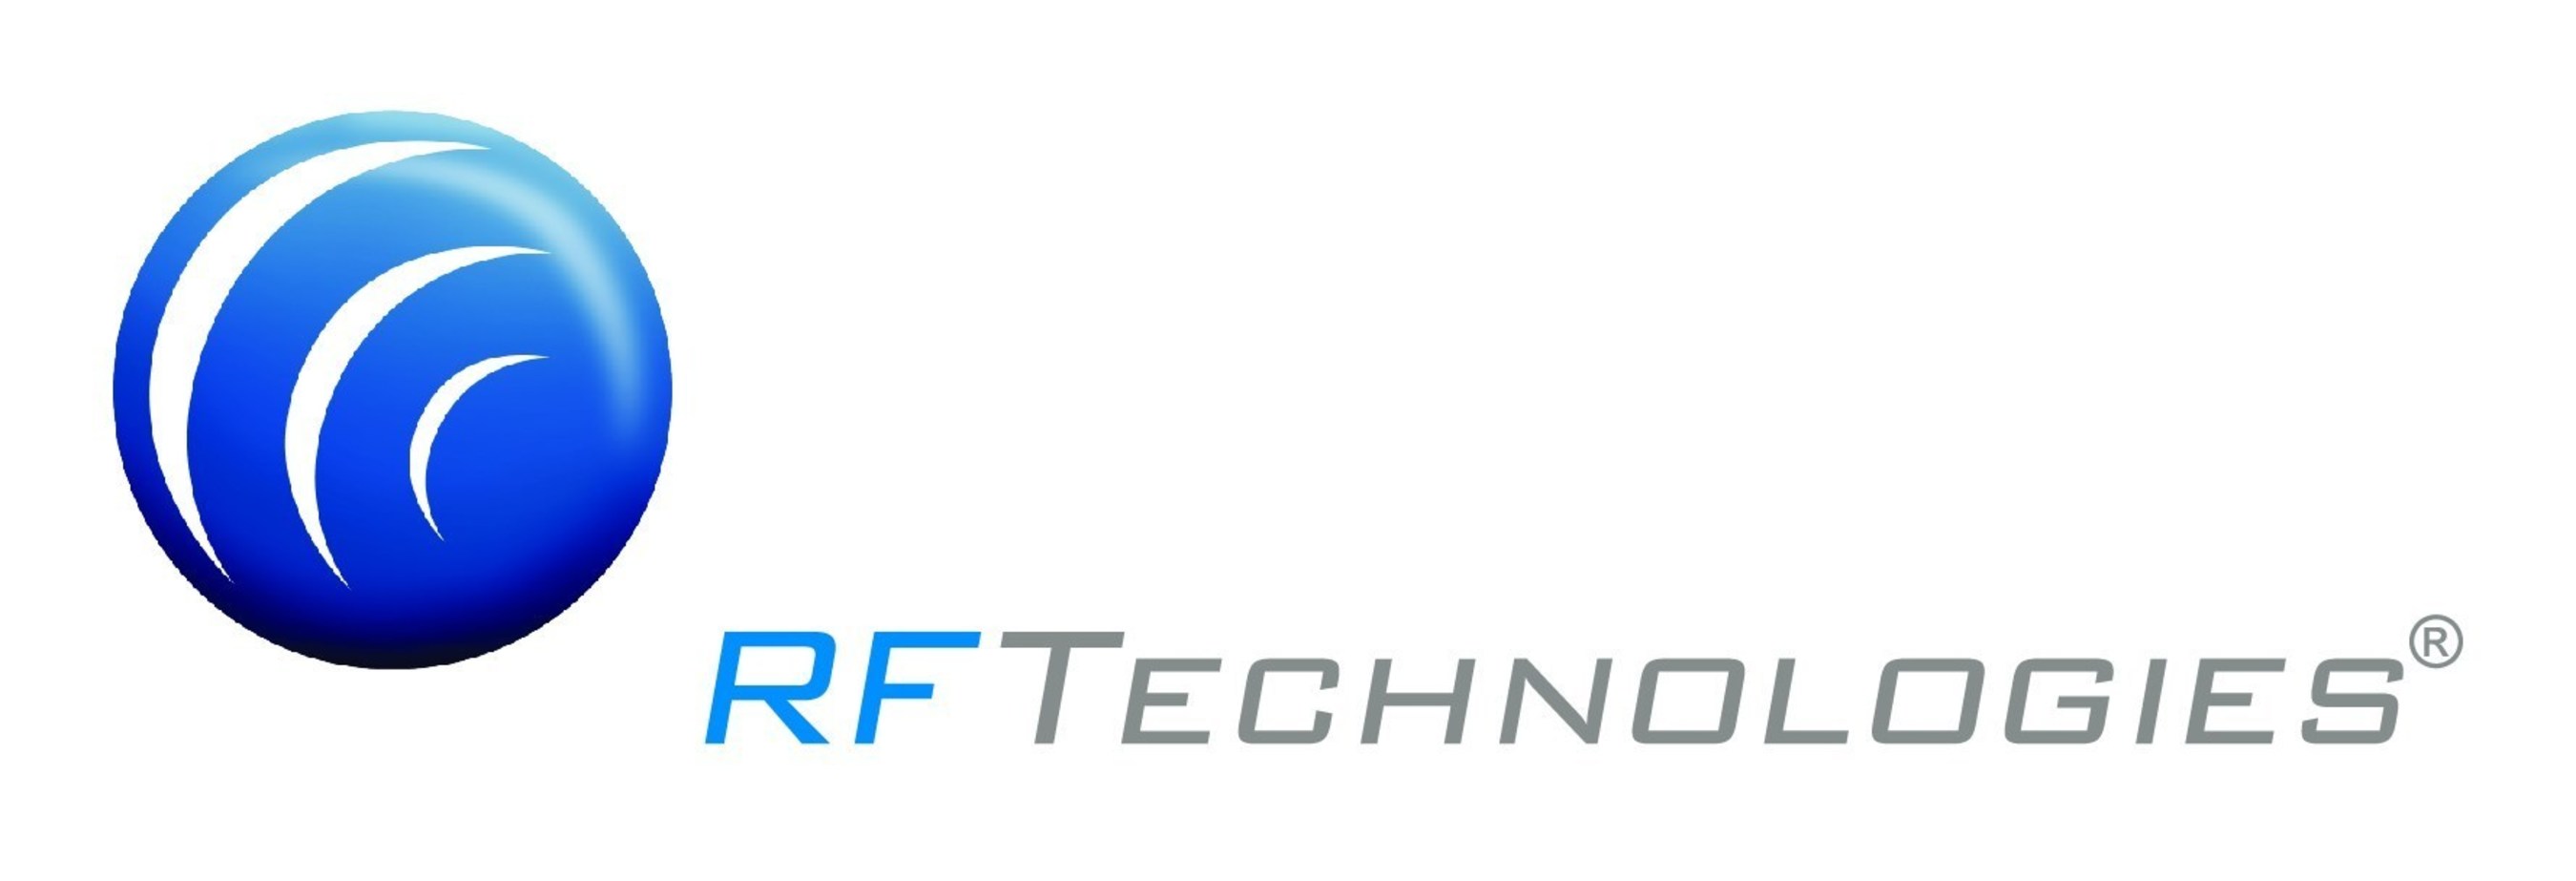 RF Technologies, Inc.